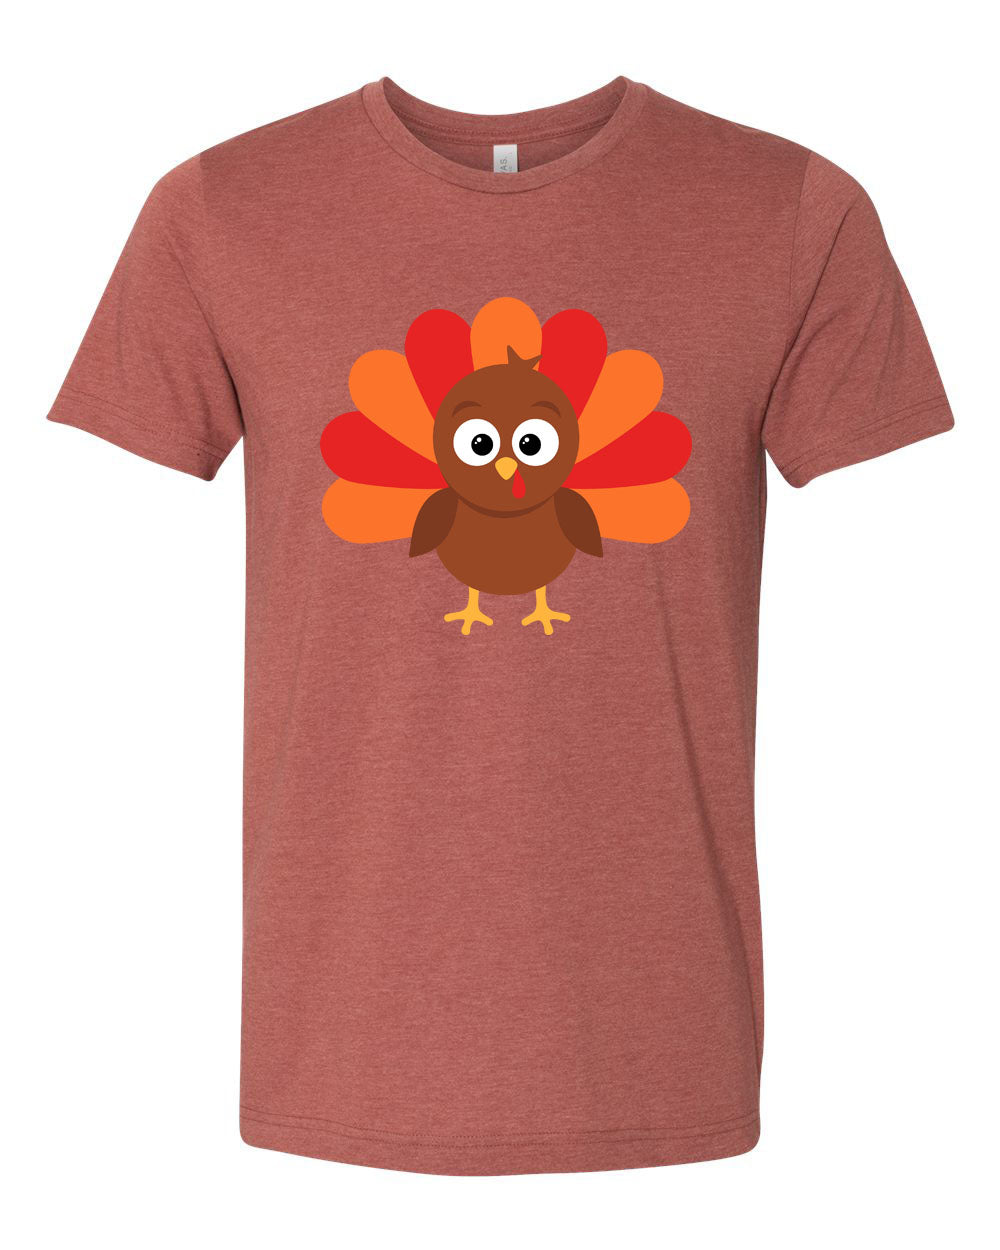 Turkey T-Shirt, Thanksgiving